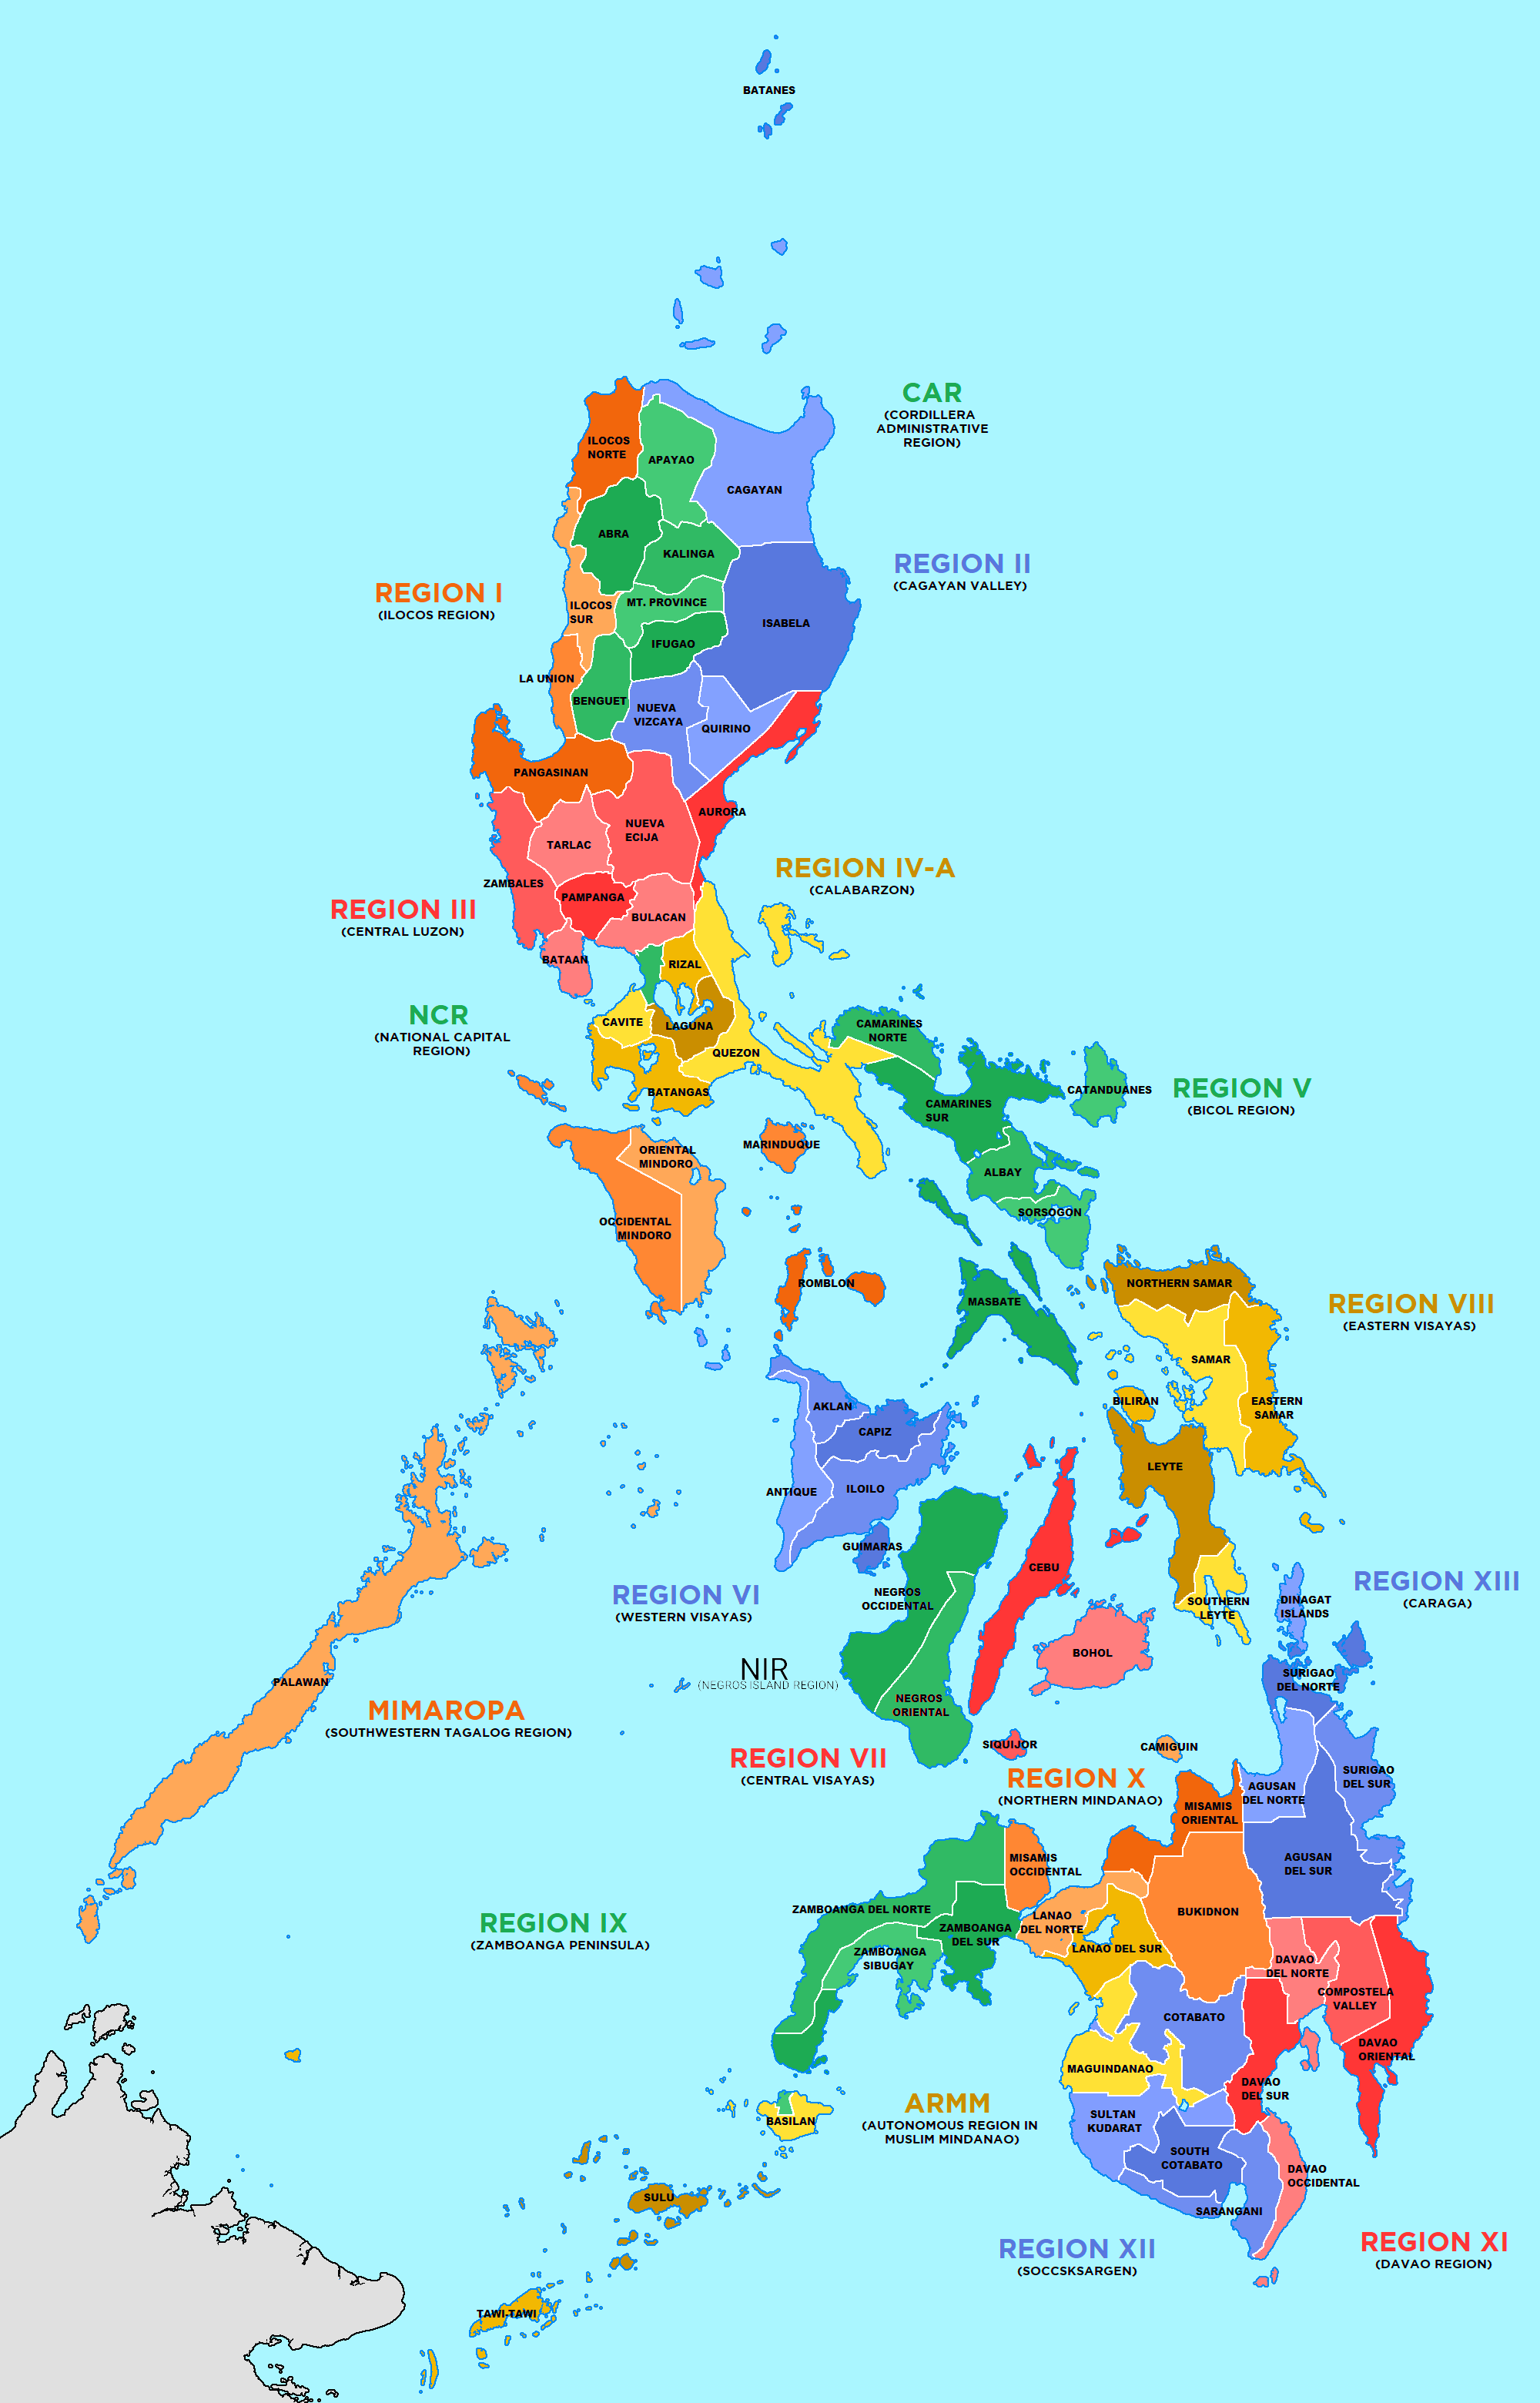  Philippines  regions and provinces   Map  PopulationData net